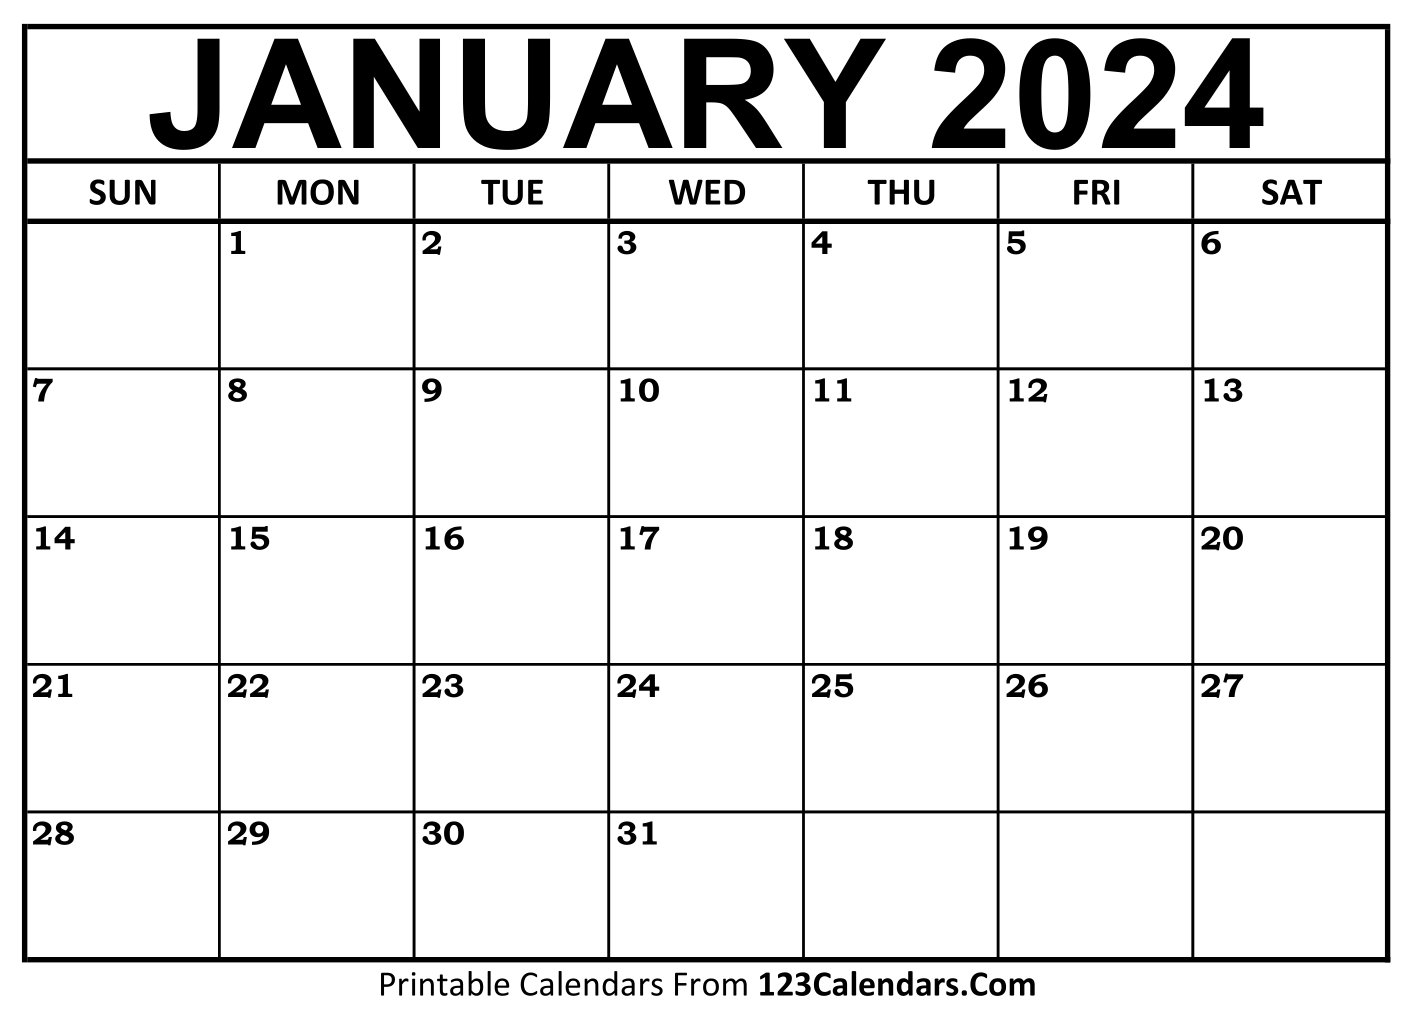 Printable January 2024 Calendar Templates - 123Calendars for January Printable Calendar 2024 Free